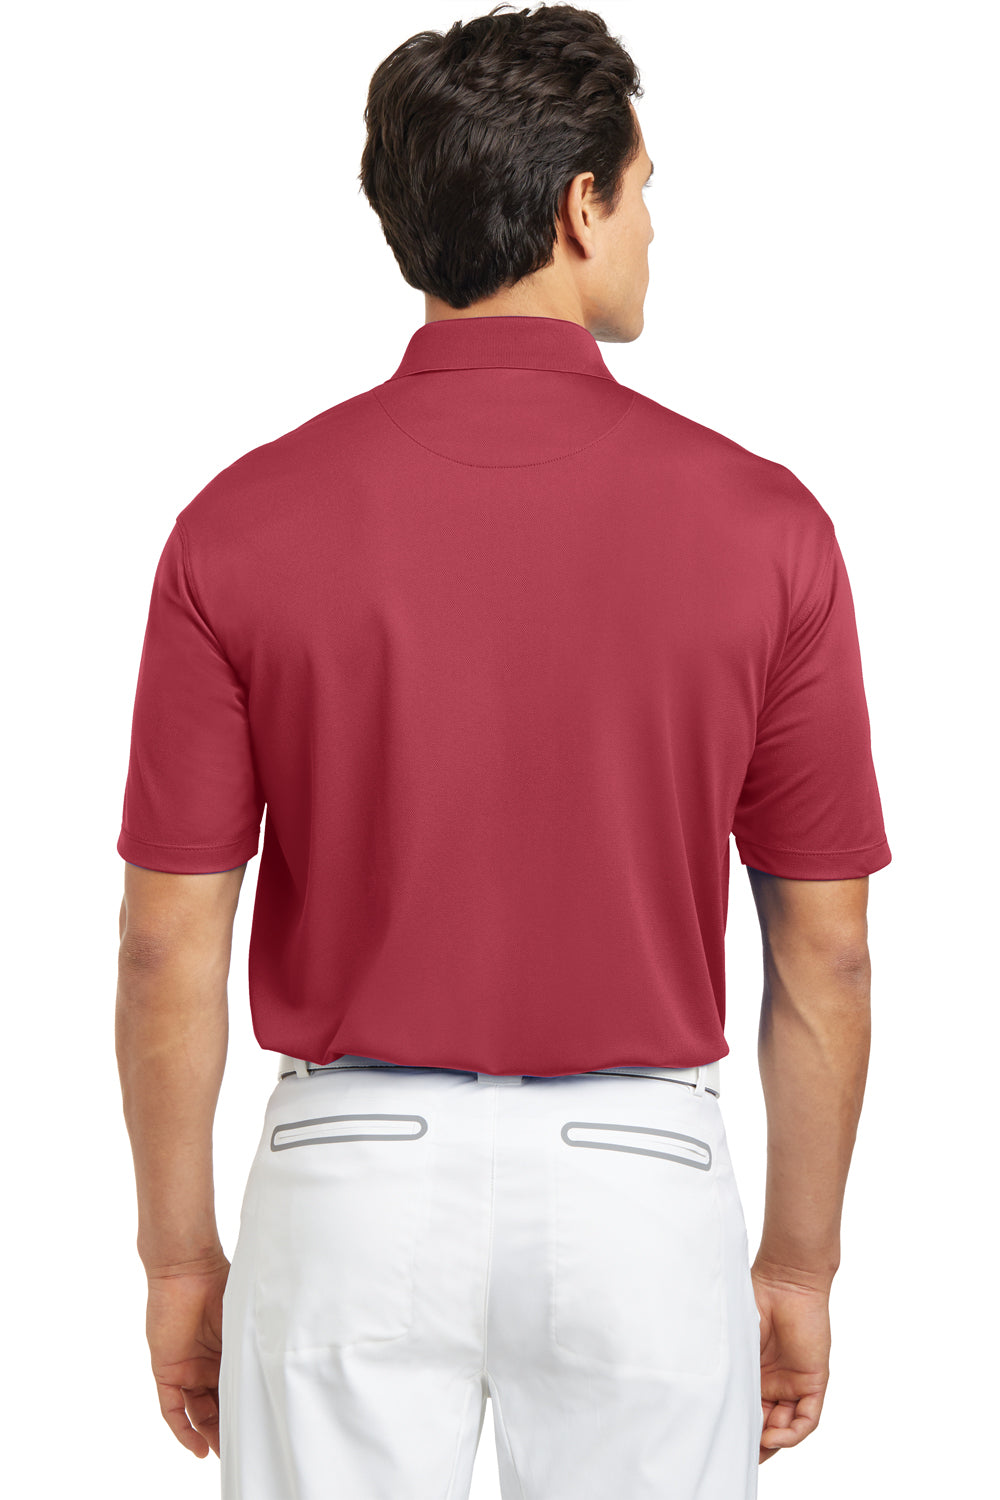 Nike 203690 Mens Tech Basic Dri-Fit Moisture Wicking Short Sleeve Polo Shirt Pro Red Model Back